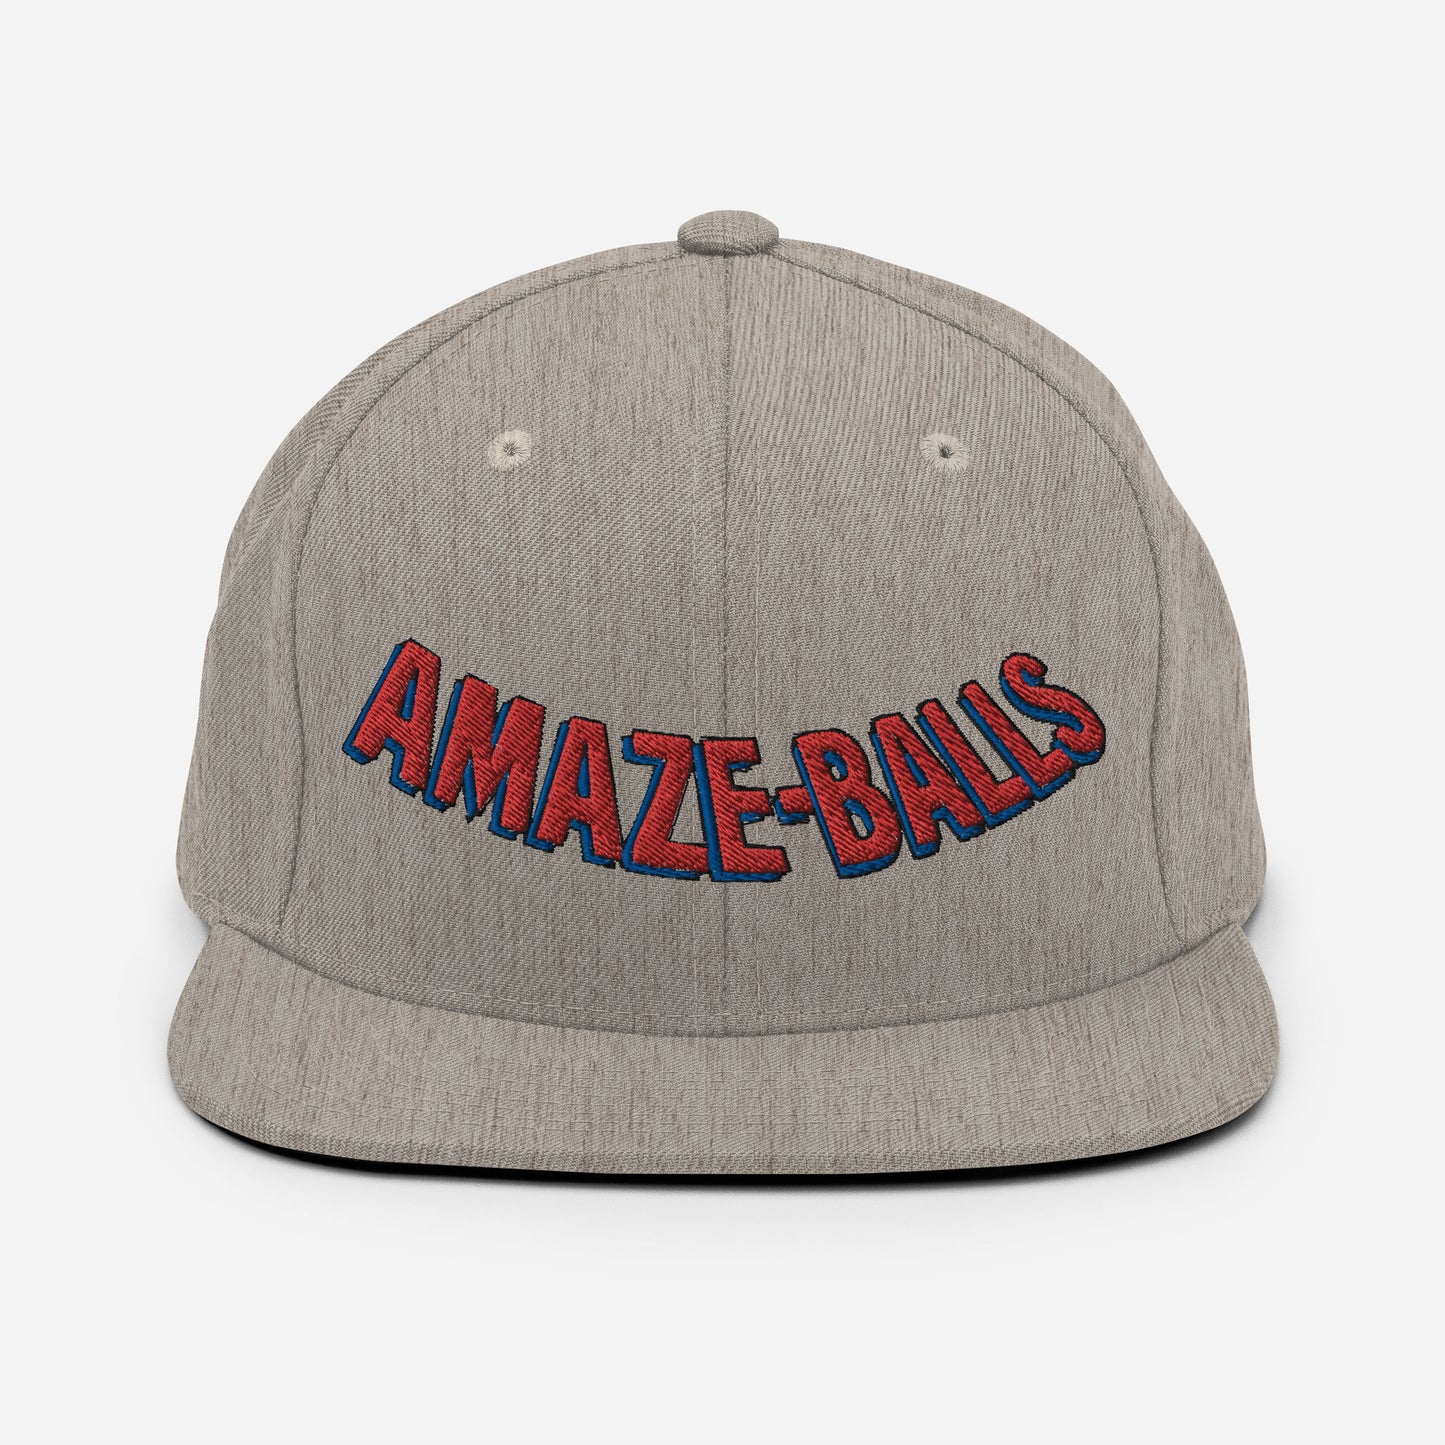 Amaze-Balls snapback hat